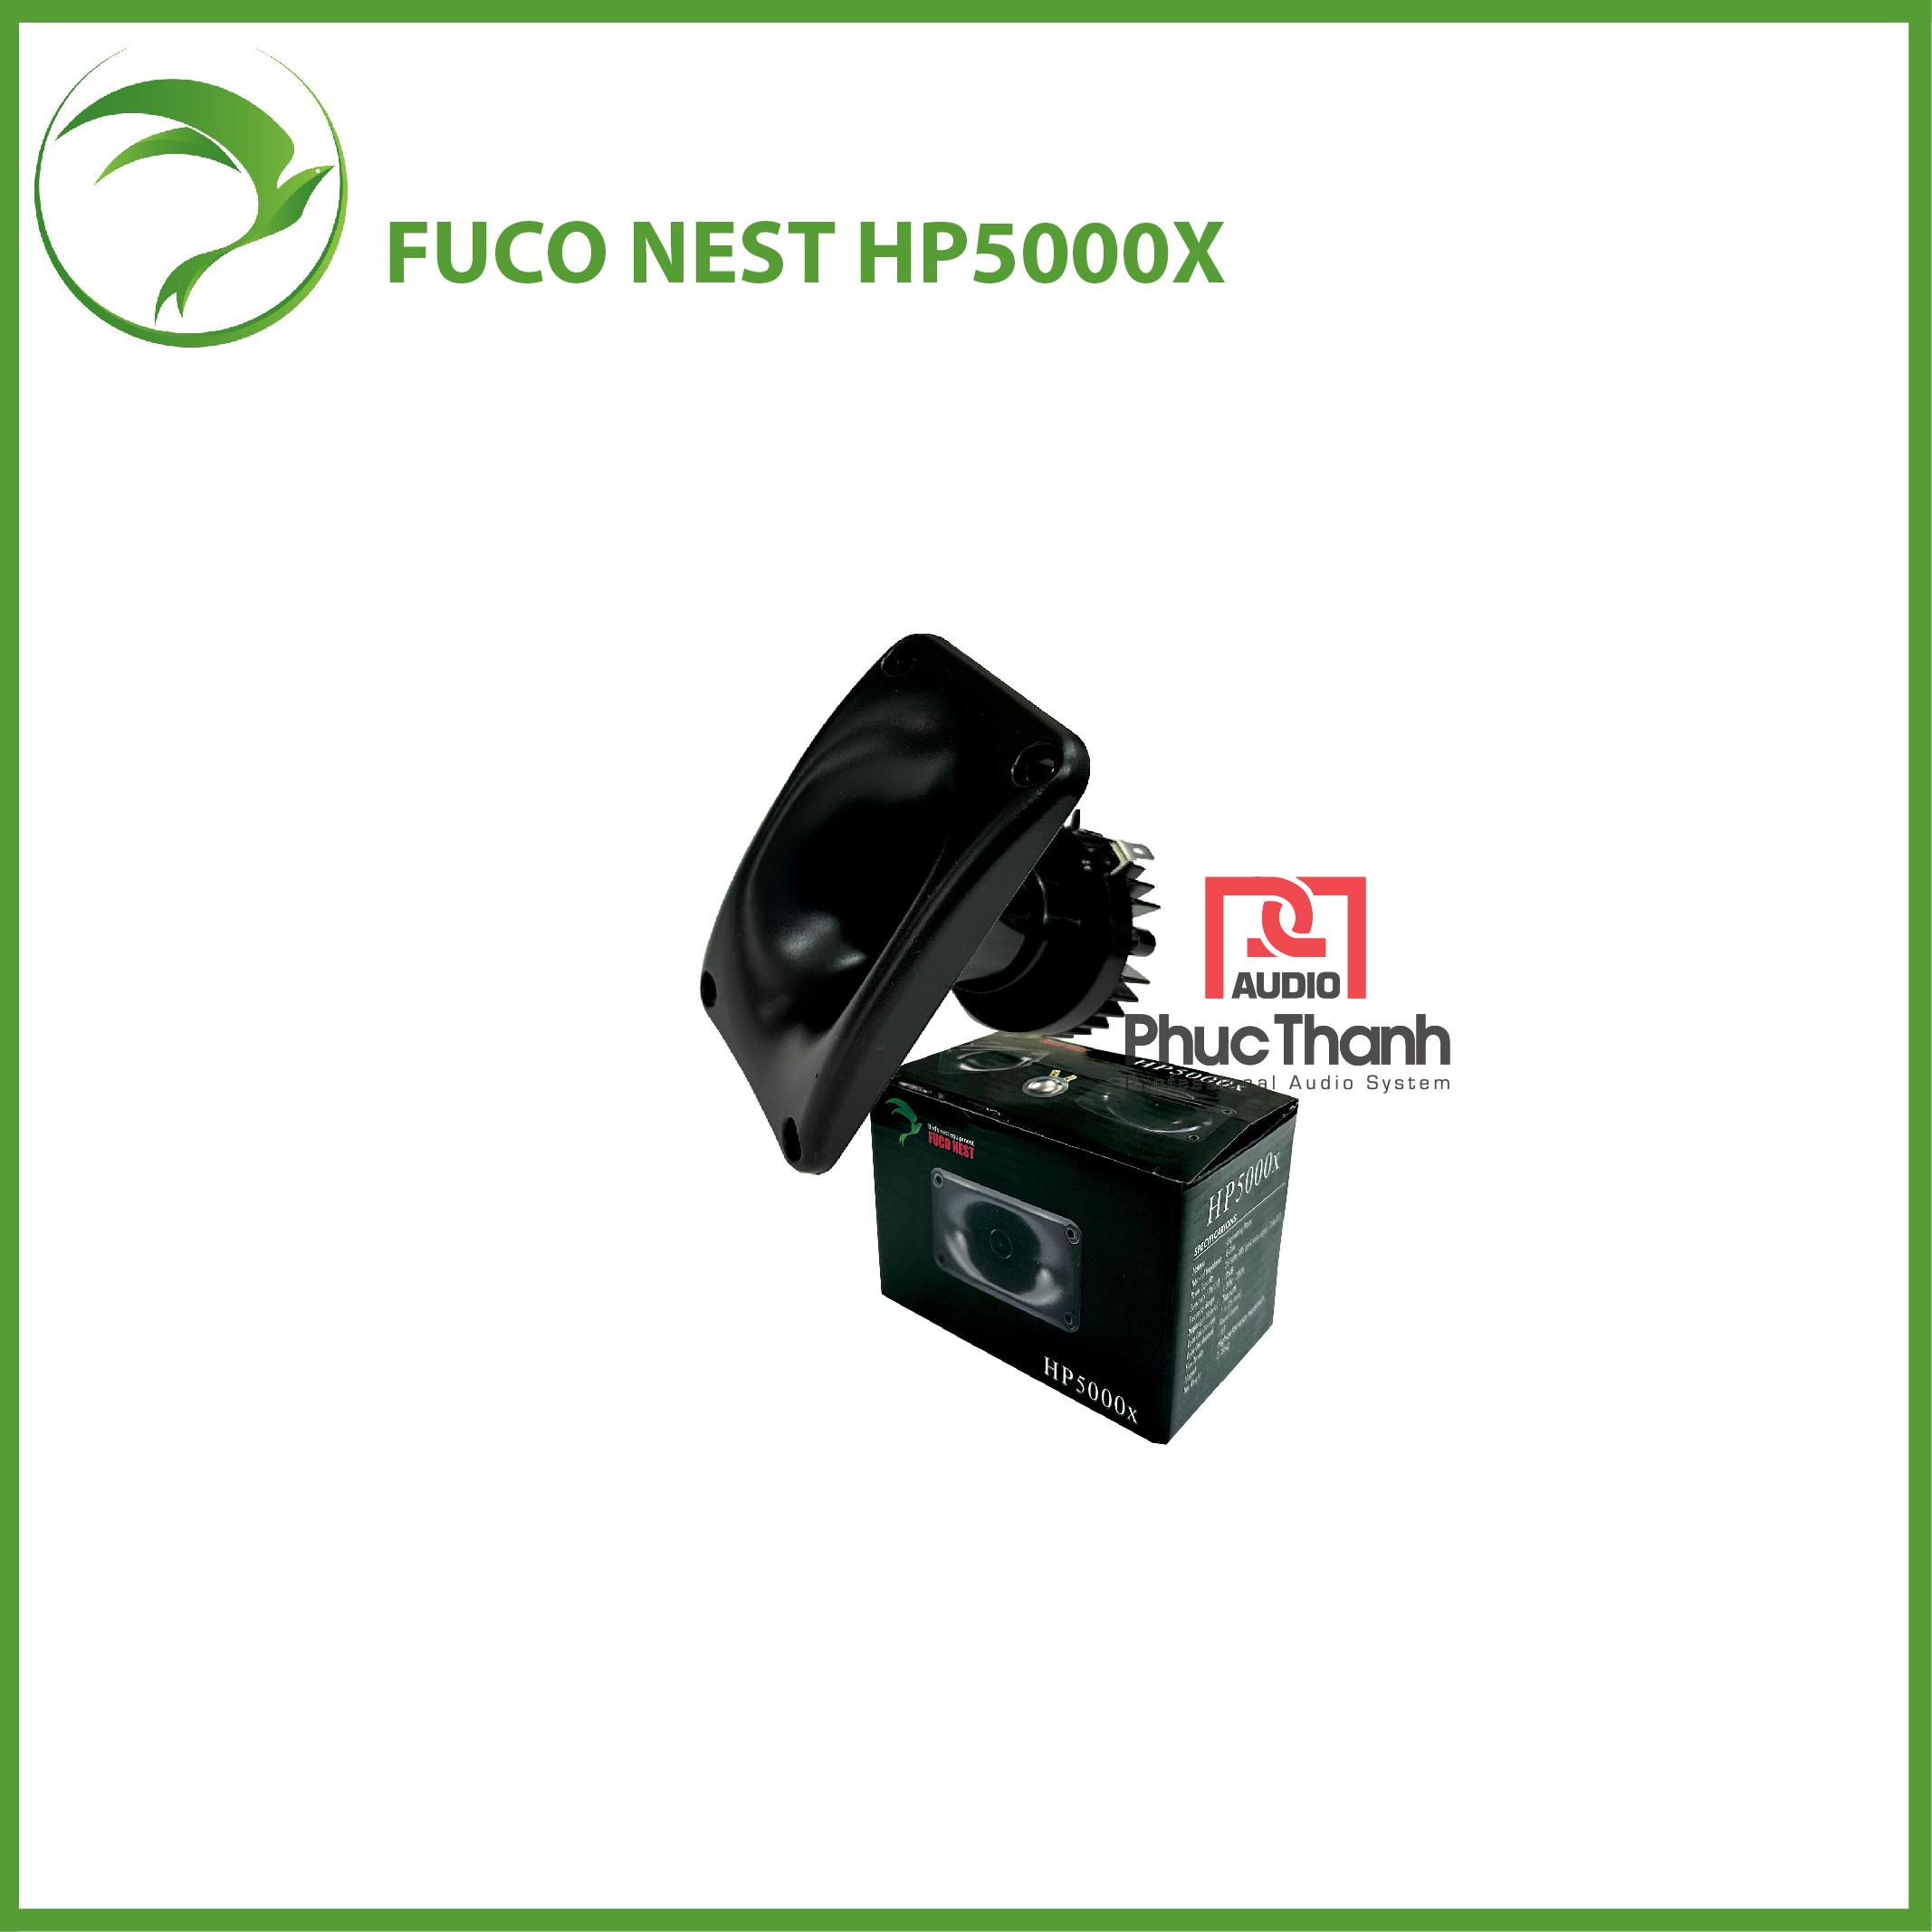 Loa Fuco Nest HP5000X